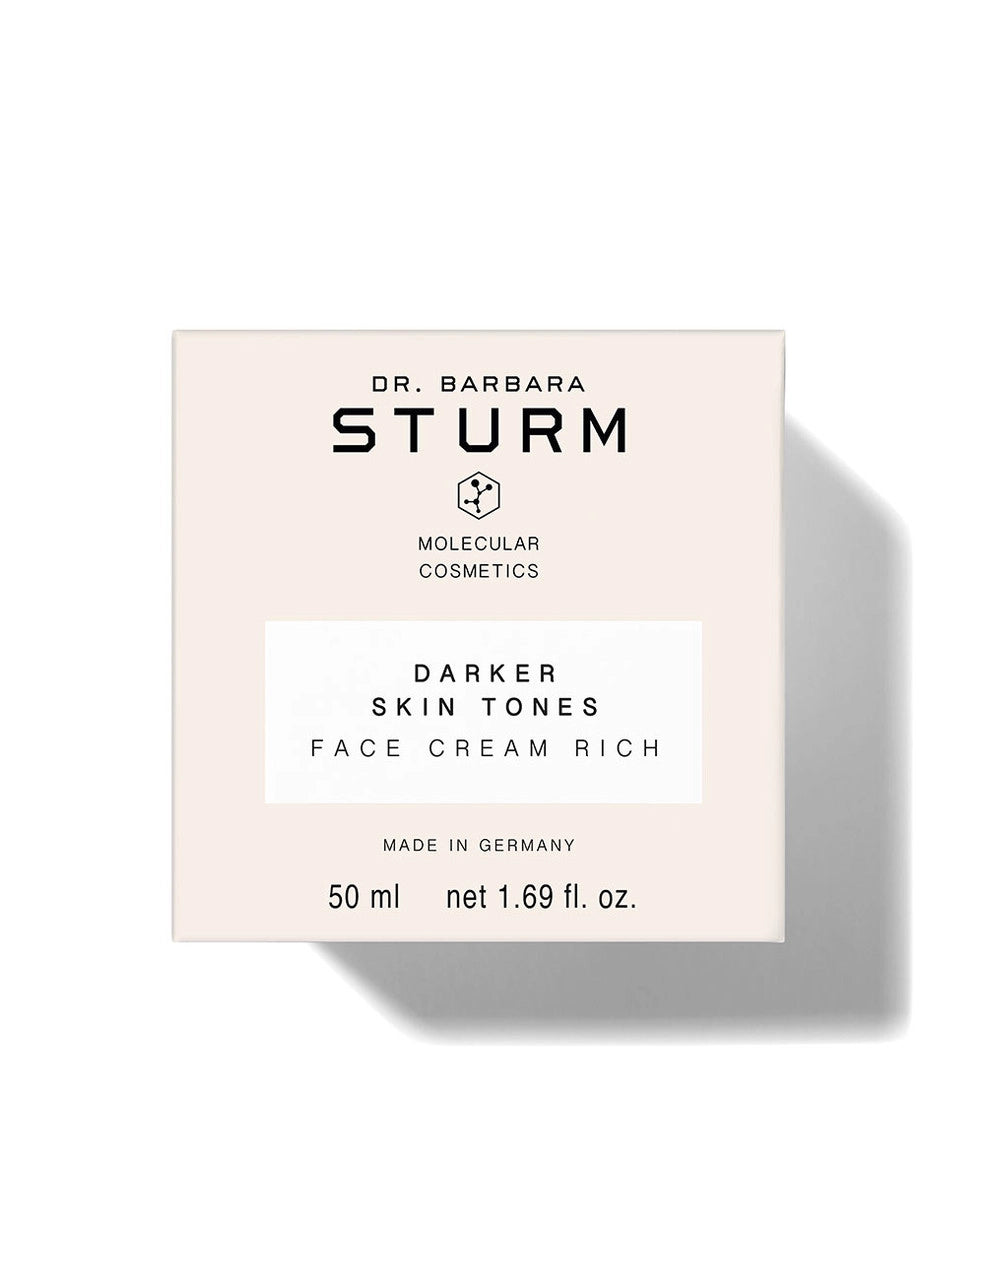 Darker Skin Tones Face Cream Rich box